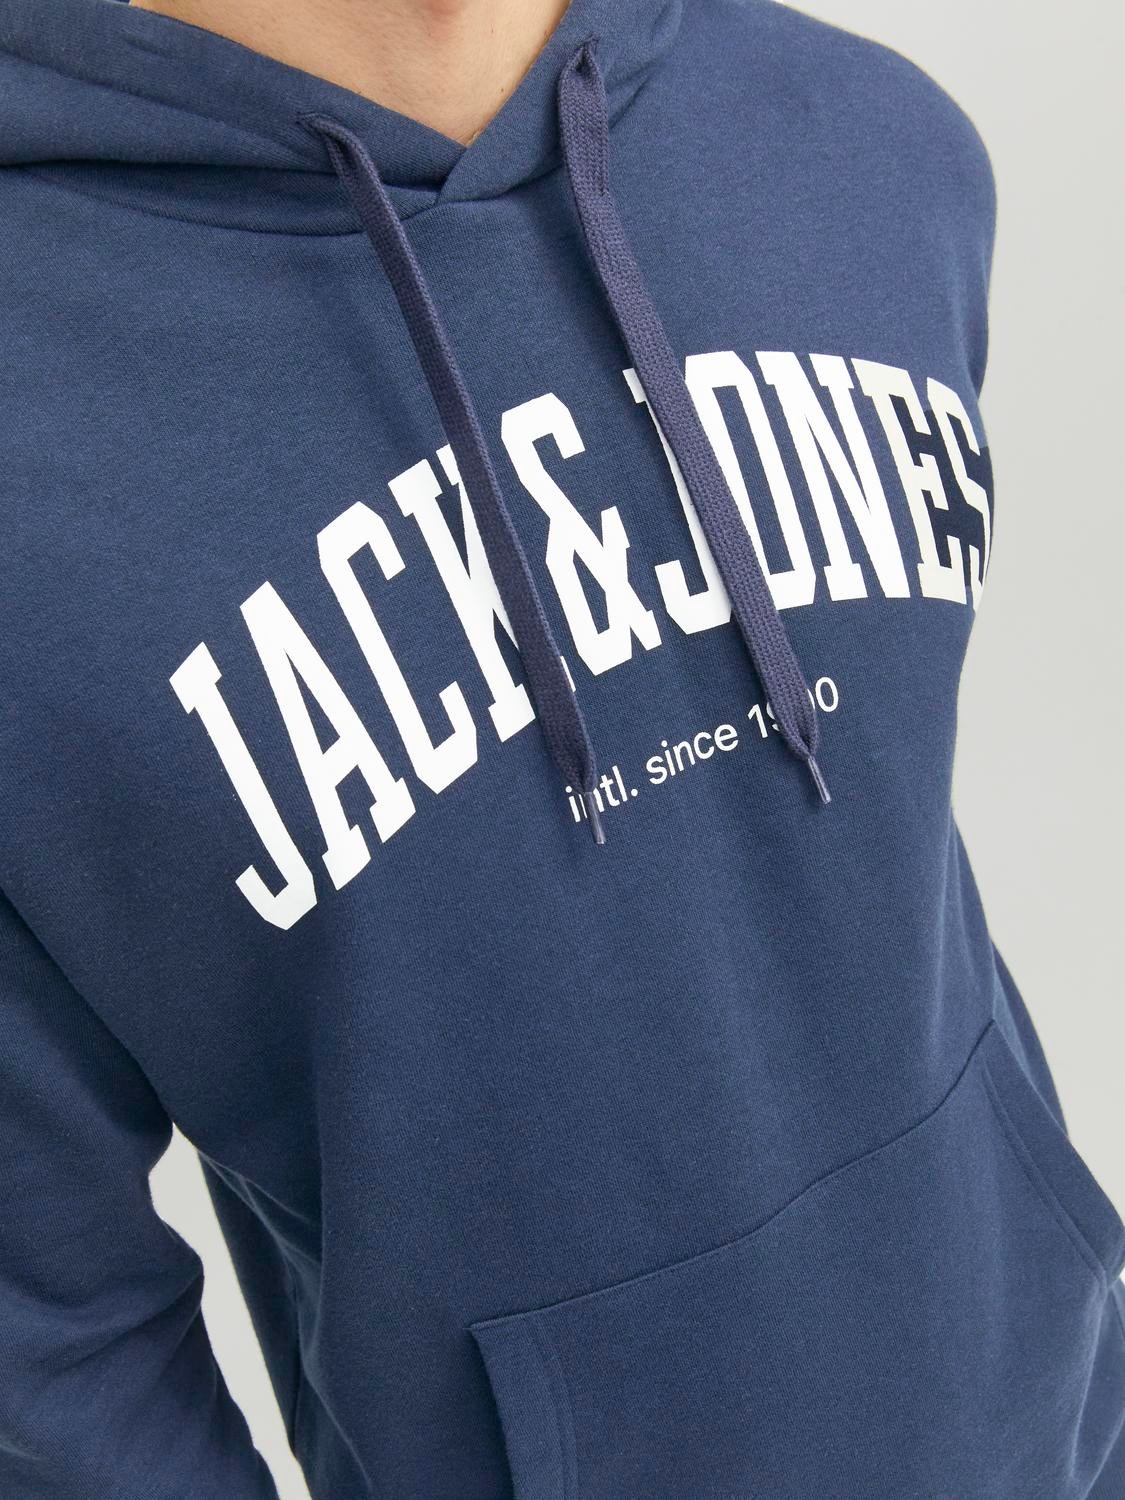 Jack & Jones Logotyp Huvtröje -Navy Blazer - 12236513